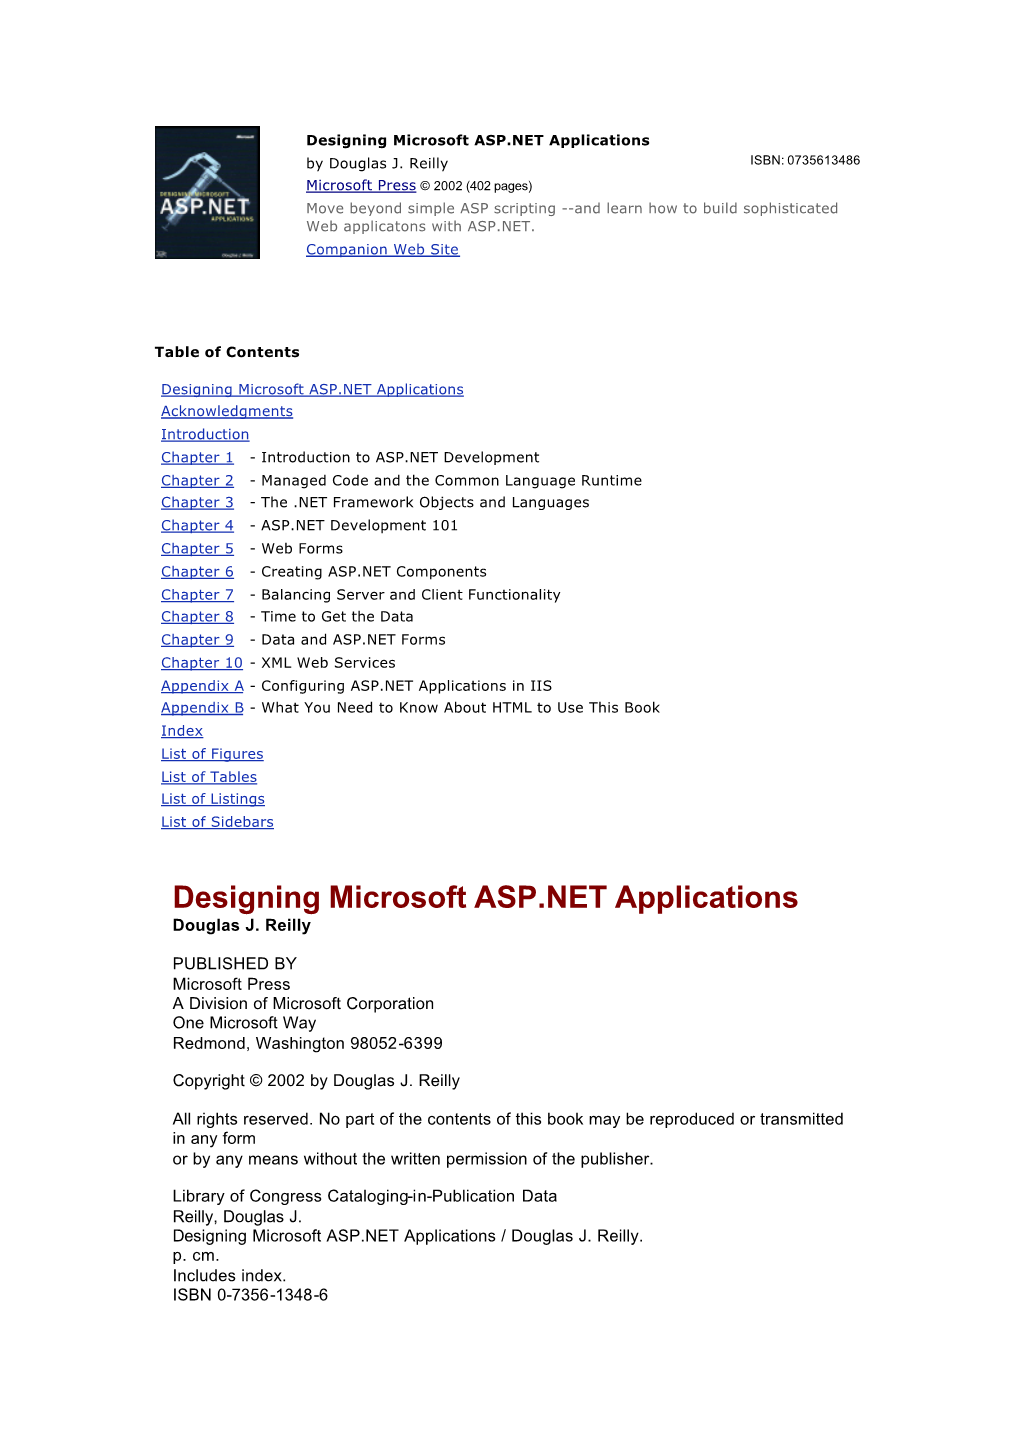 Designing Microsoft ASP.NET Applications by Douglas J